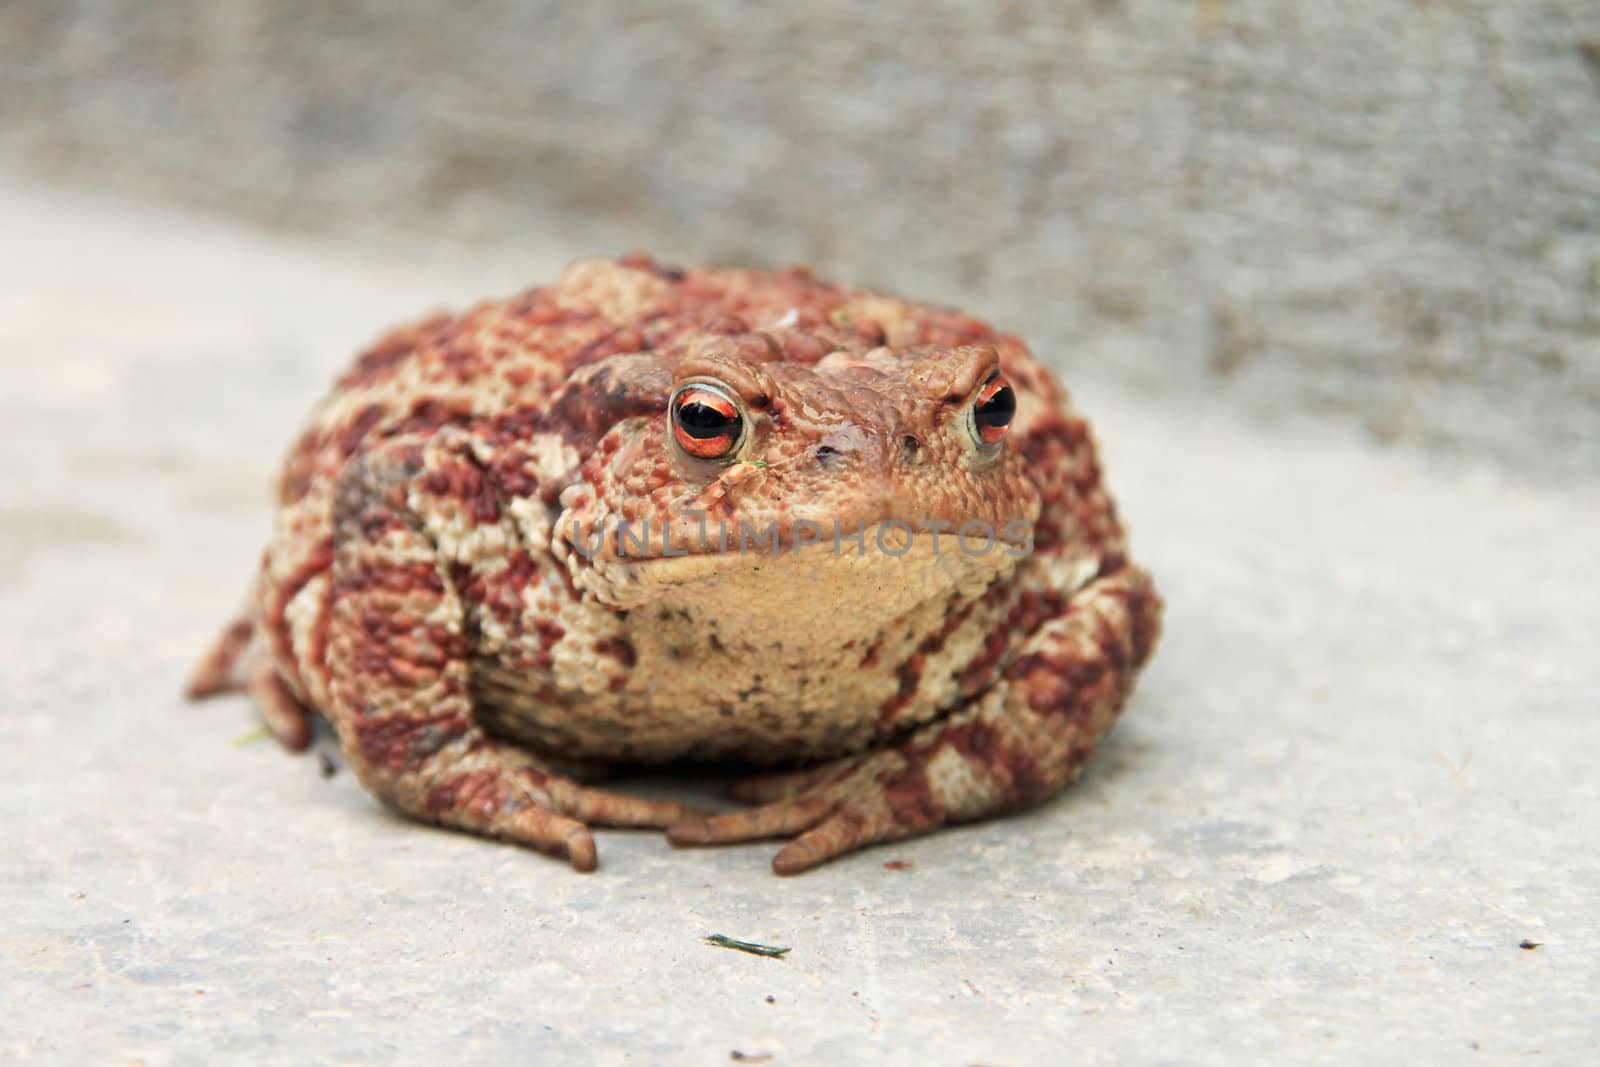 Close-up of a big, ferruginous toad